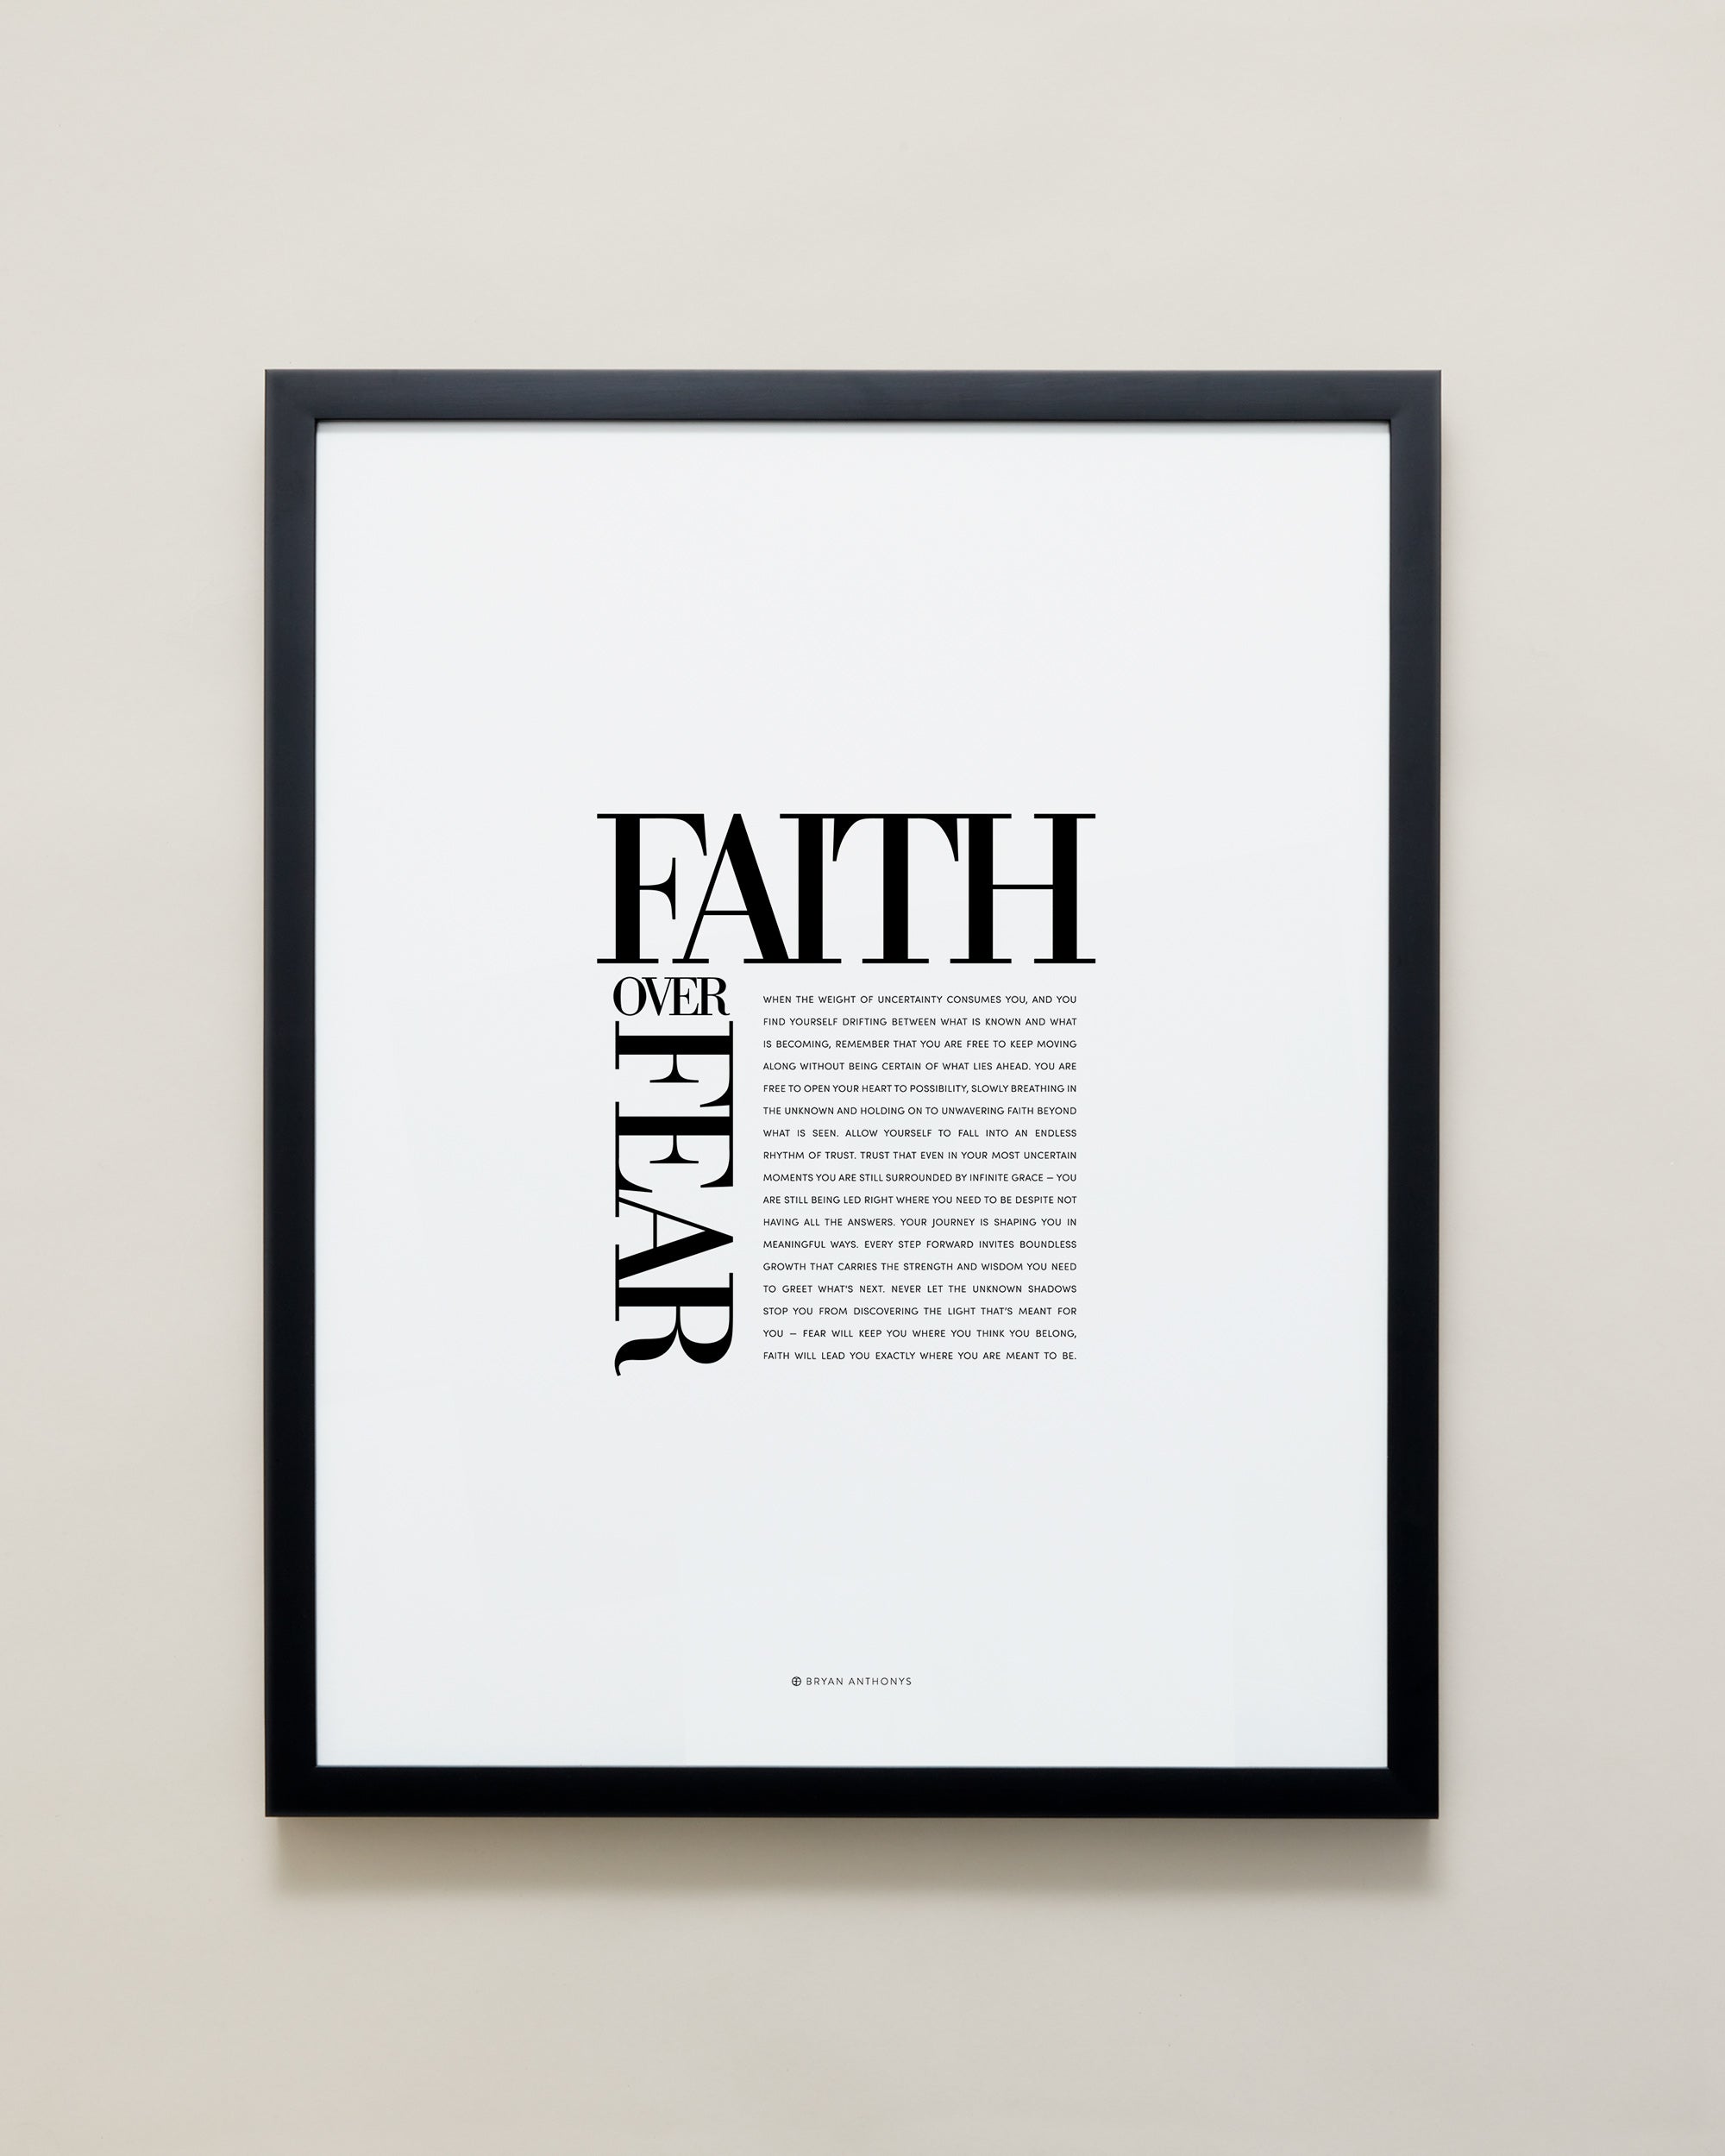 Bryan Anthonys Home Decor Purposeful Prints Faith Over Fear Editorial Framed Print Black 16x20